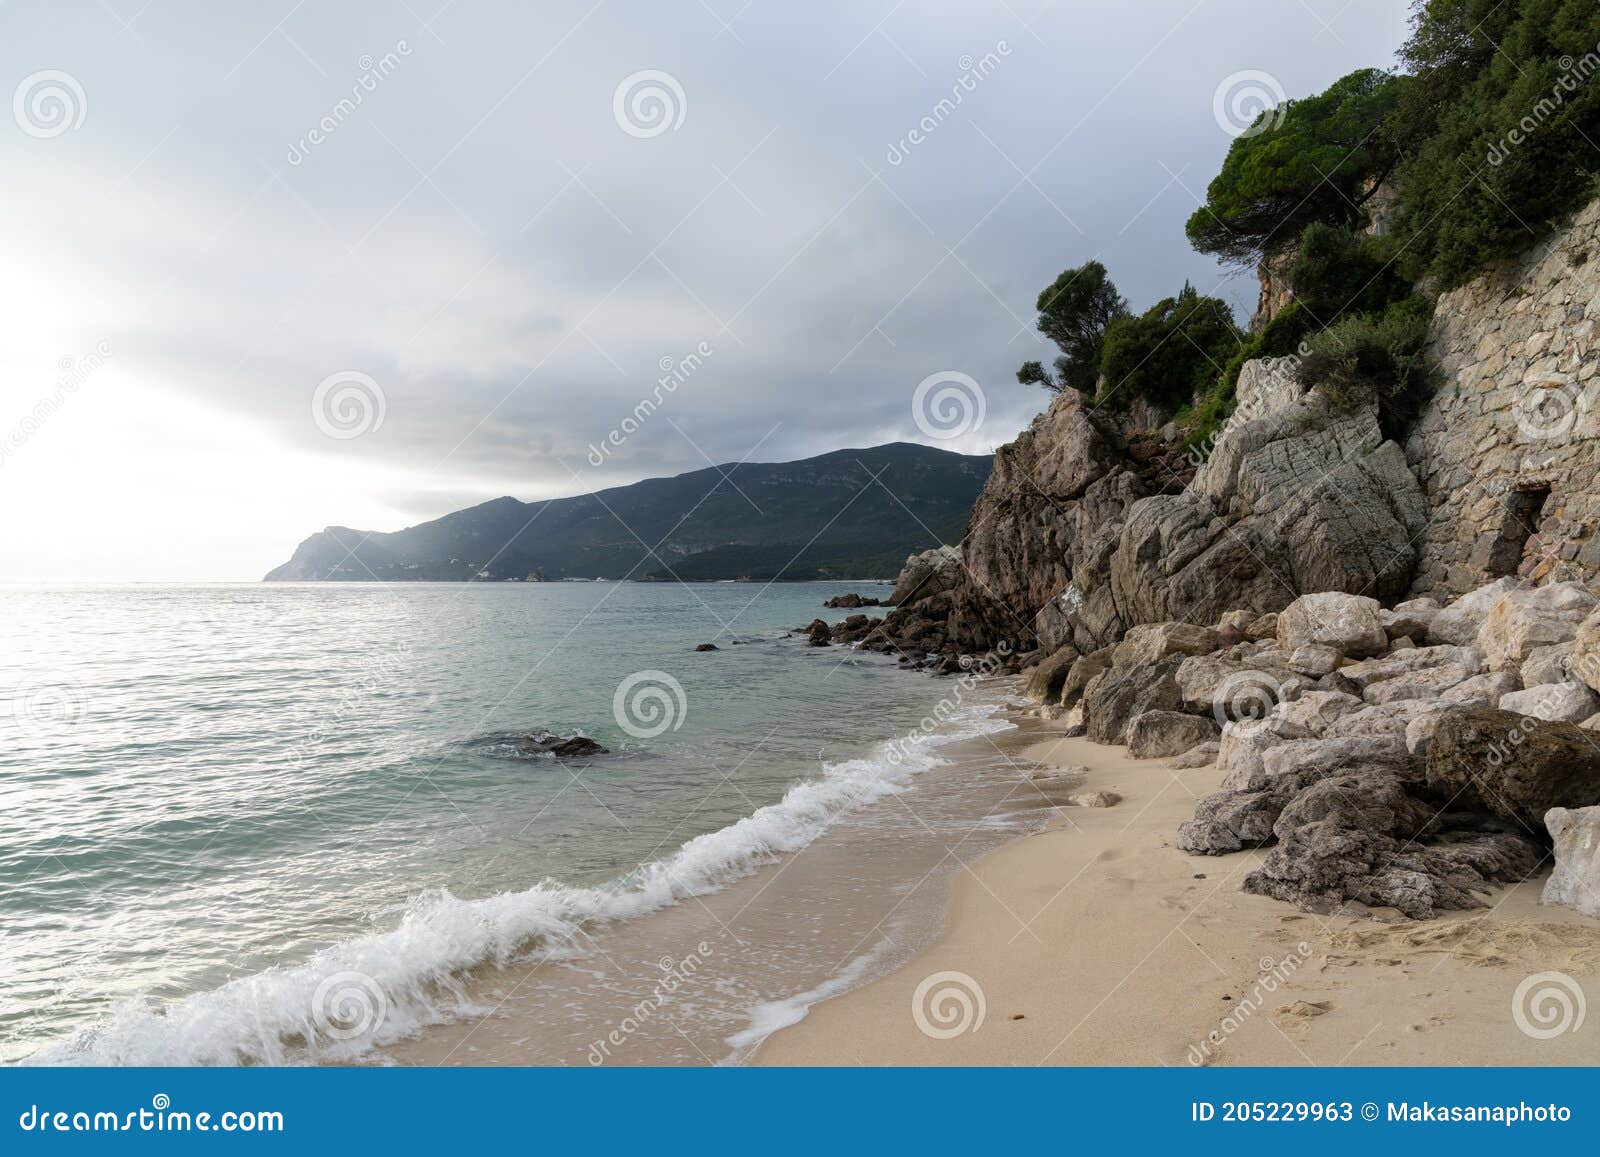 praia da figueirinho beach on the costa azul in southern portugal